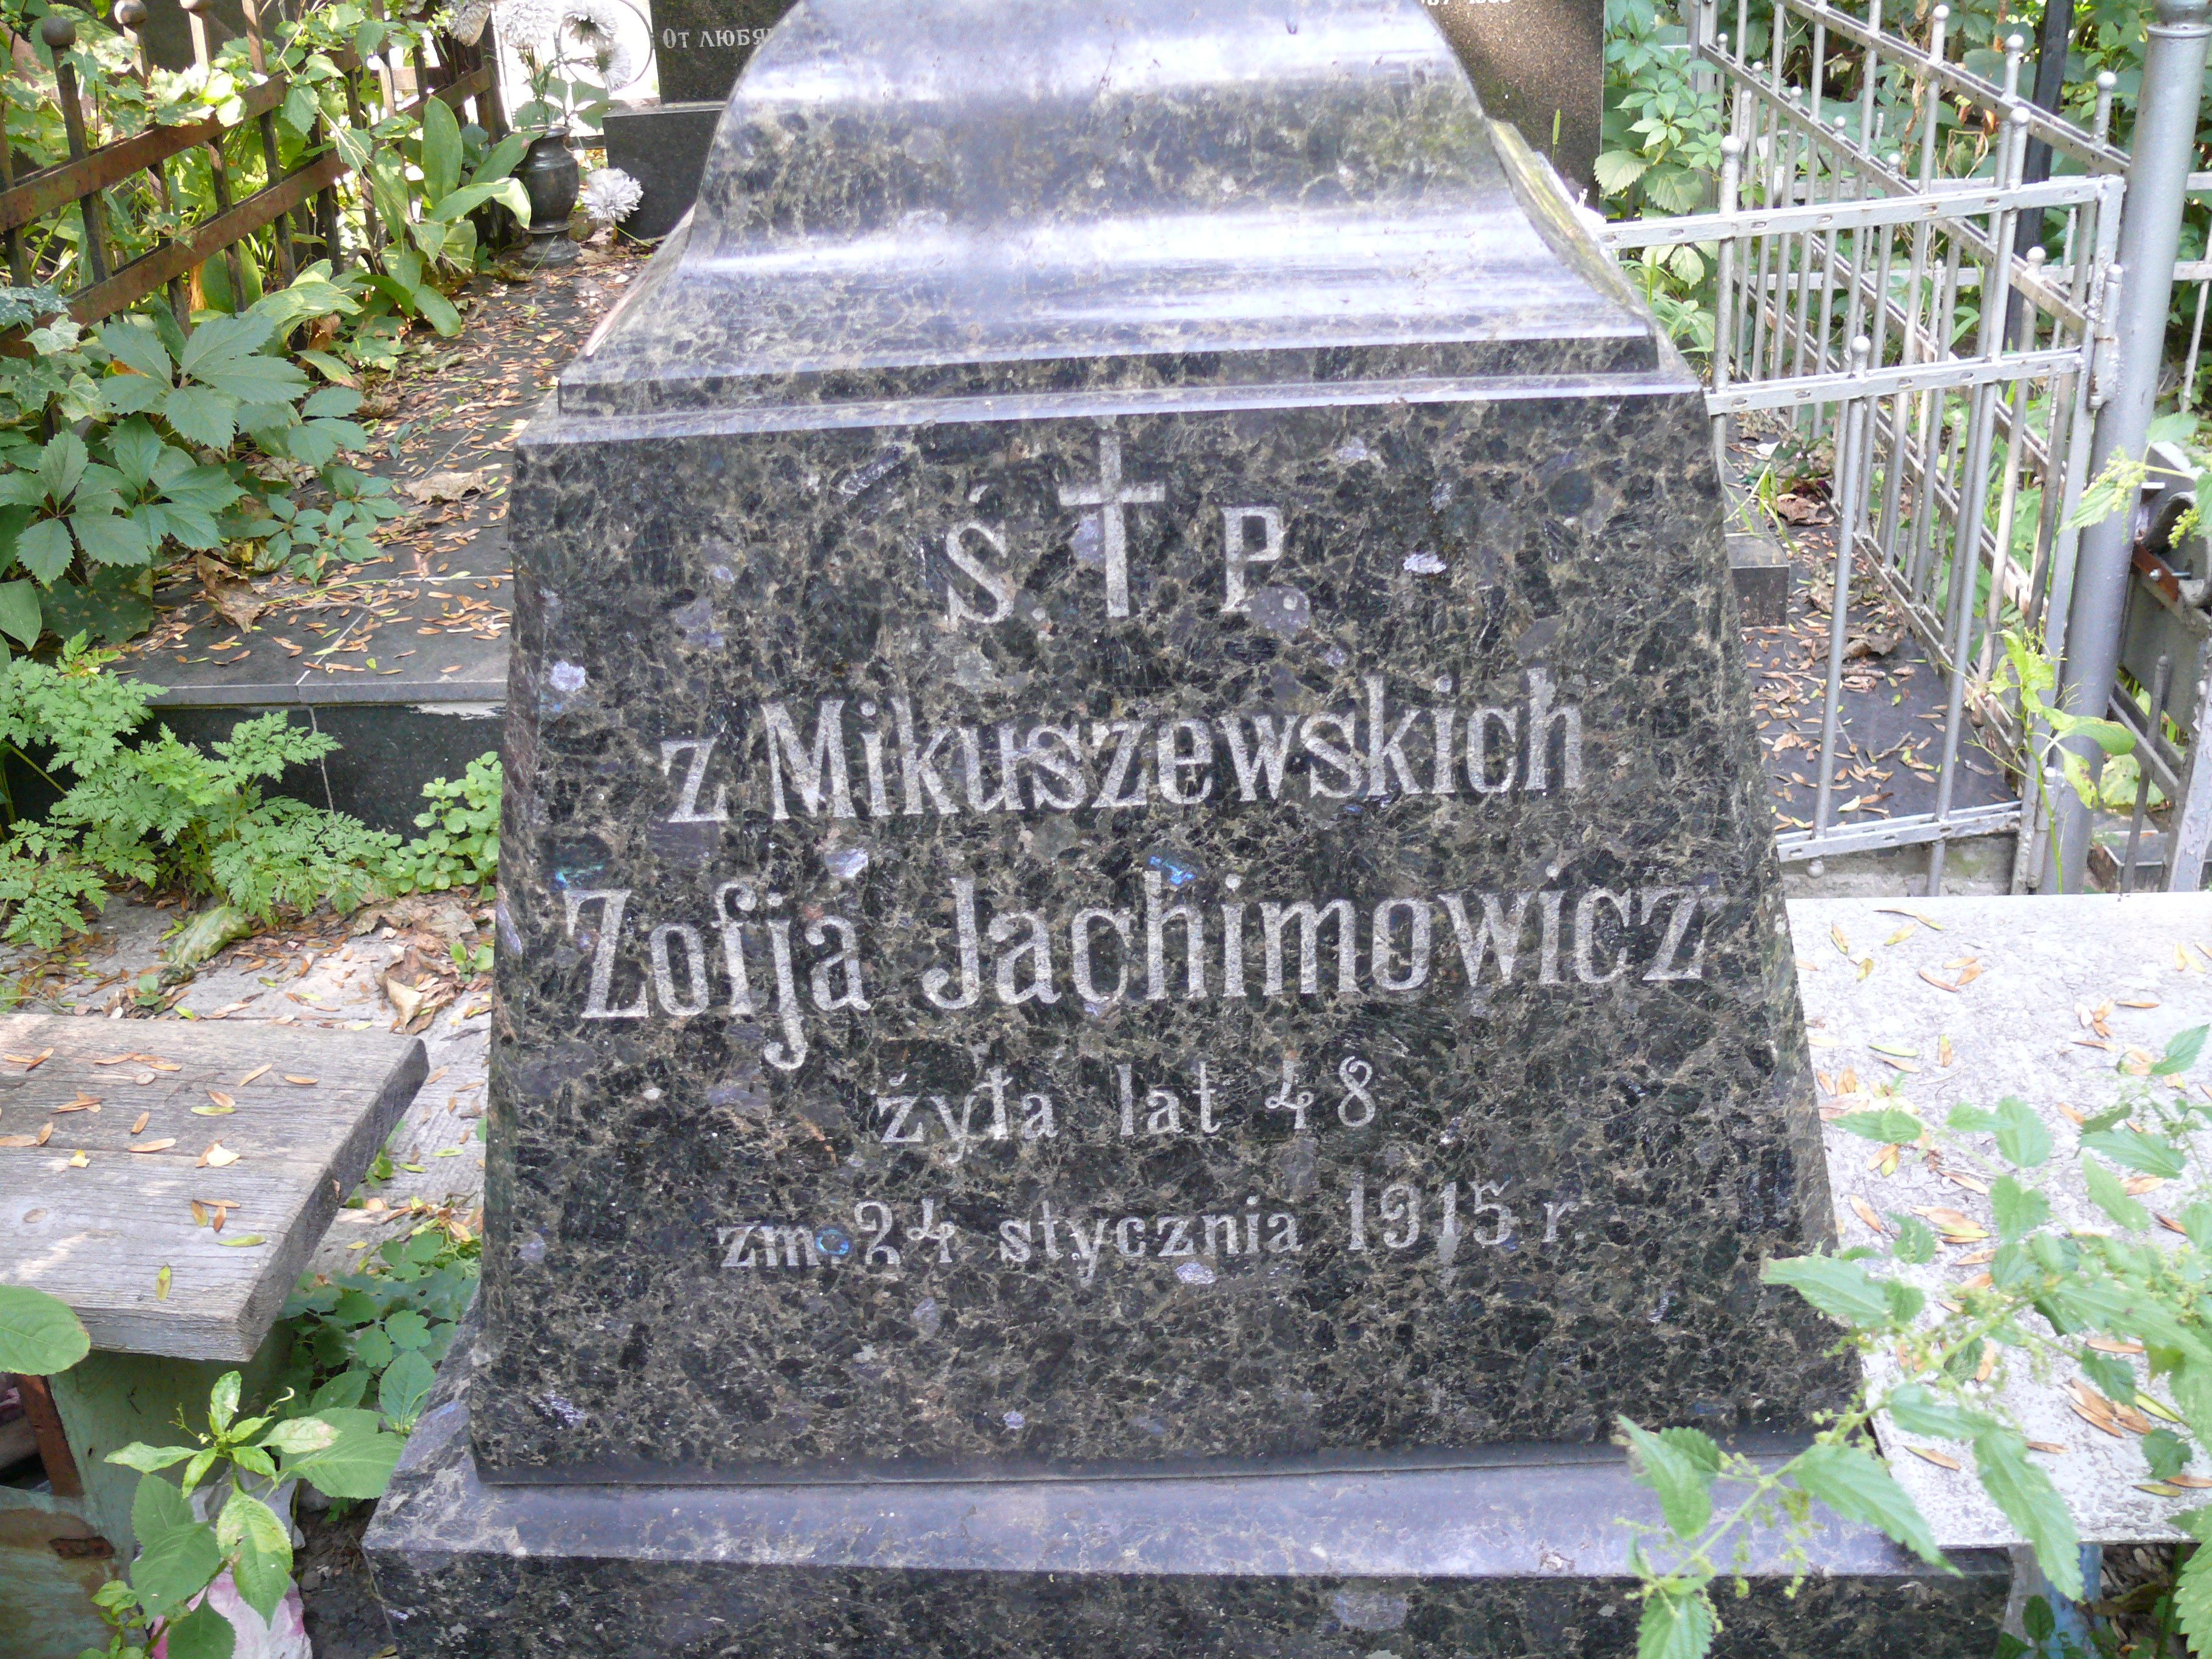 Inscription from the tombstone of Zofia Jachimowicz